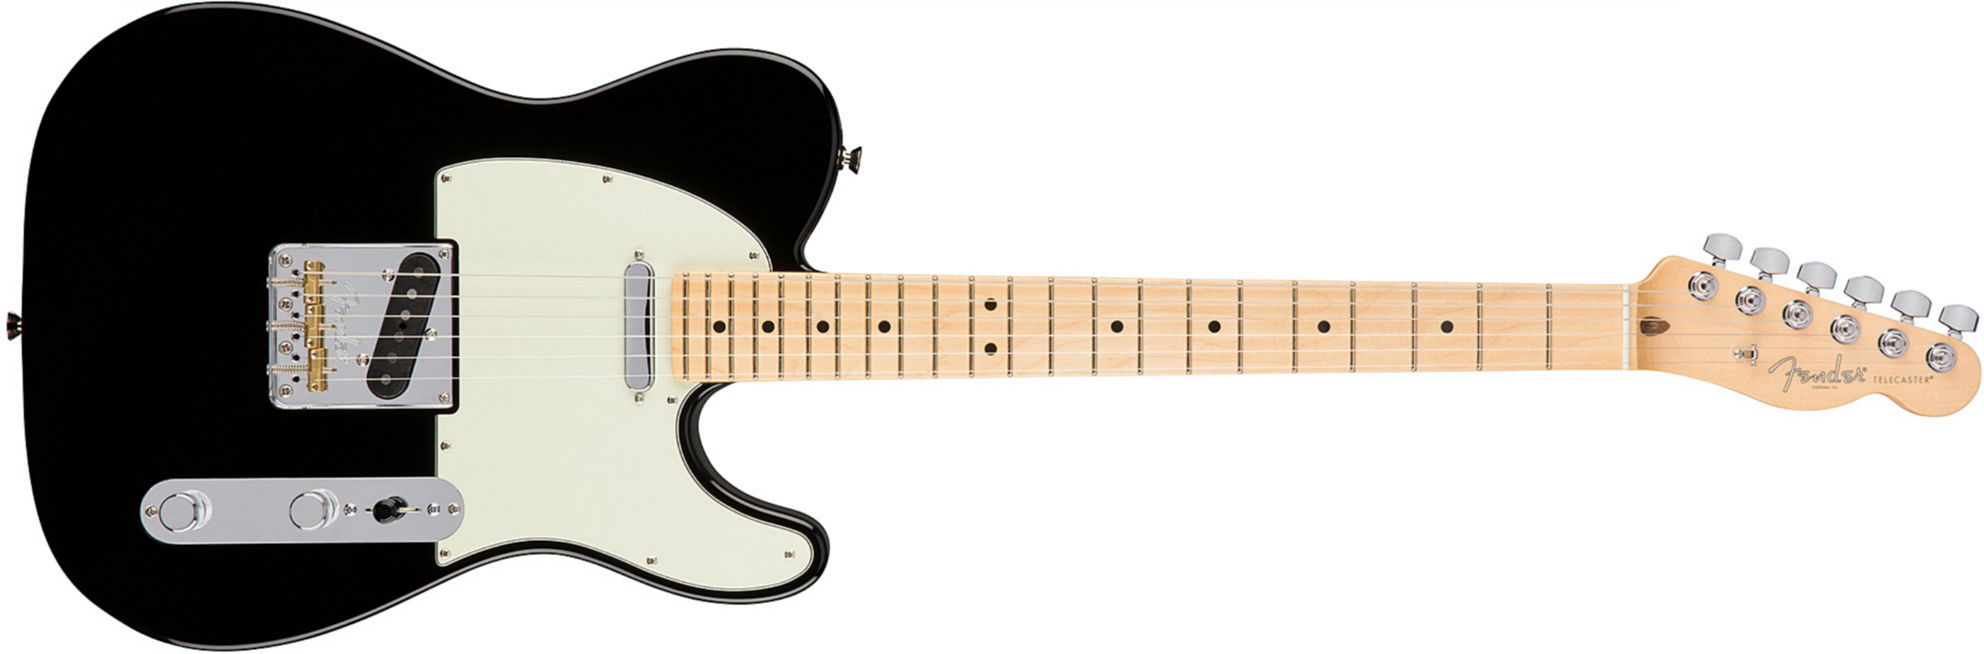 Fender Tele American Professional 2s Usa Mn - Black - Guitare Électrique Forme Tel - Main picture